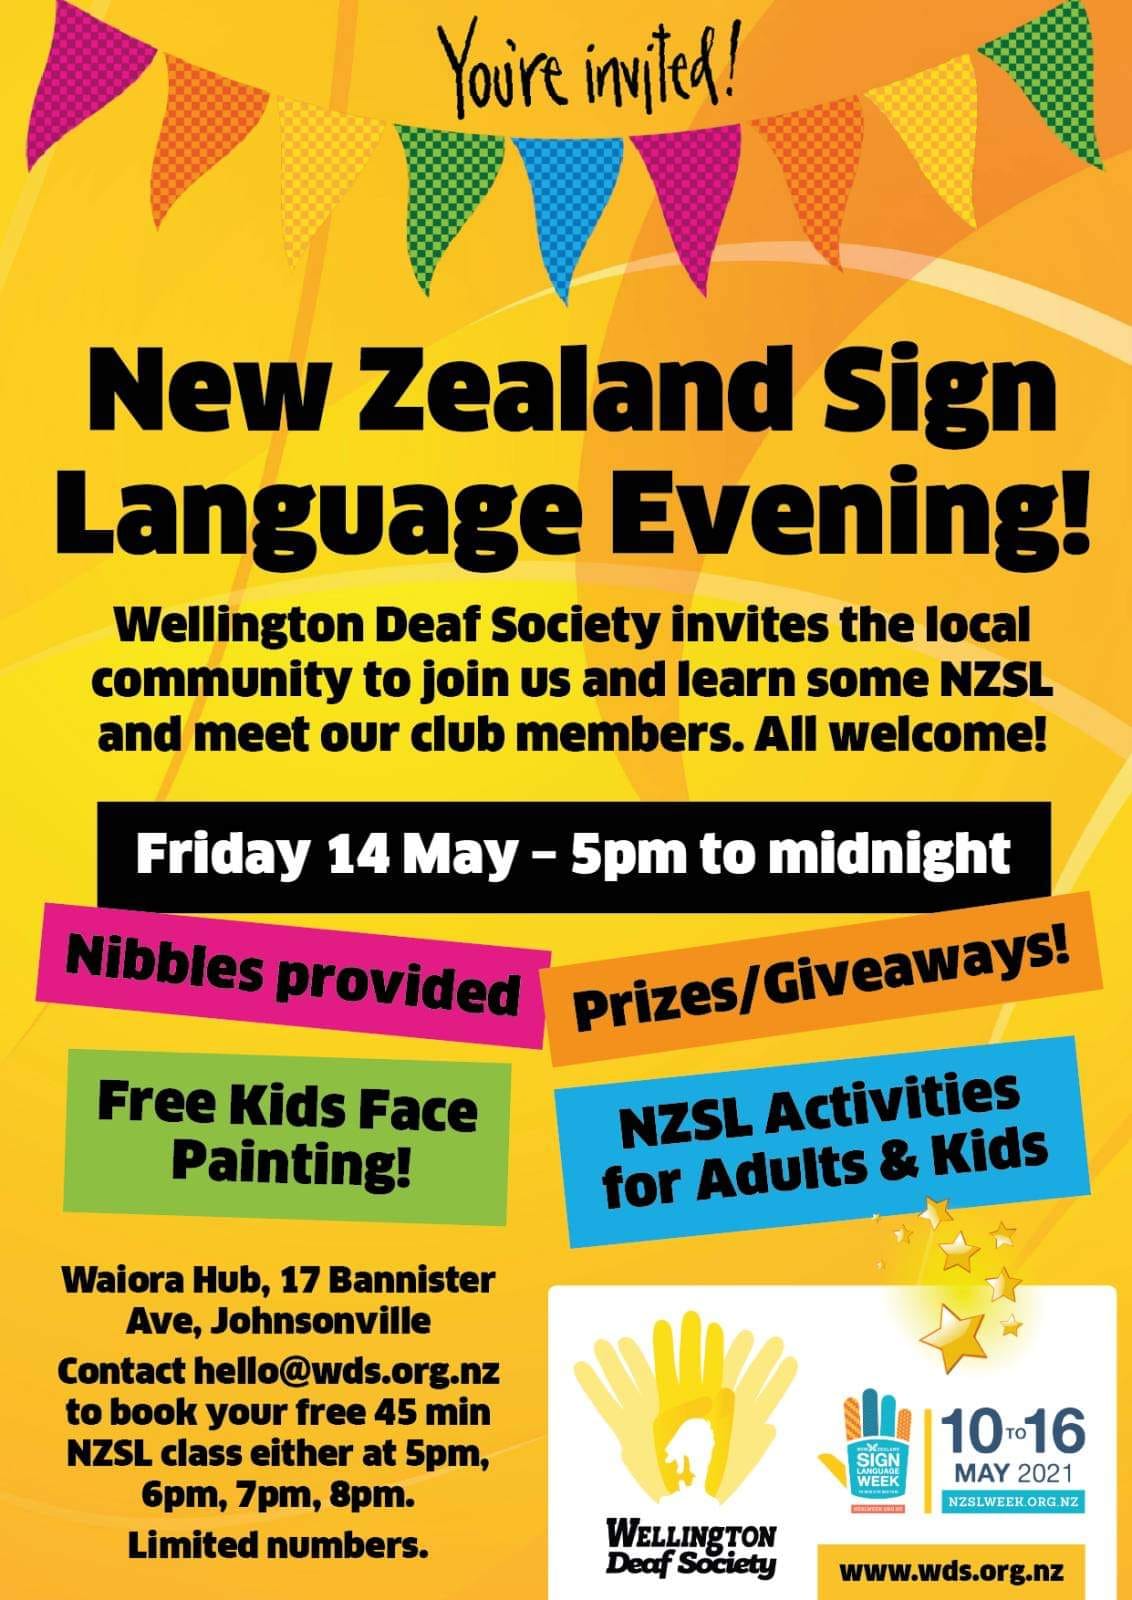 Flyer advertising NZSL evening